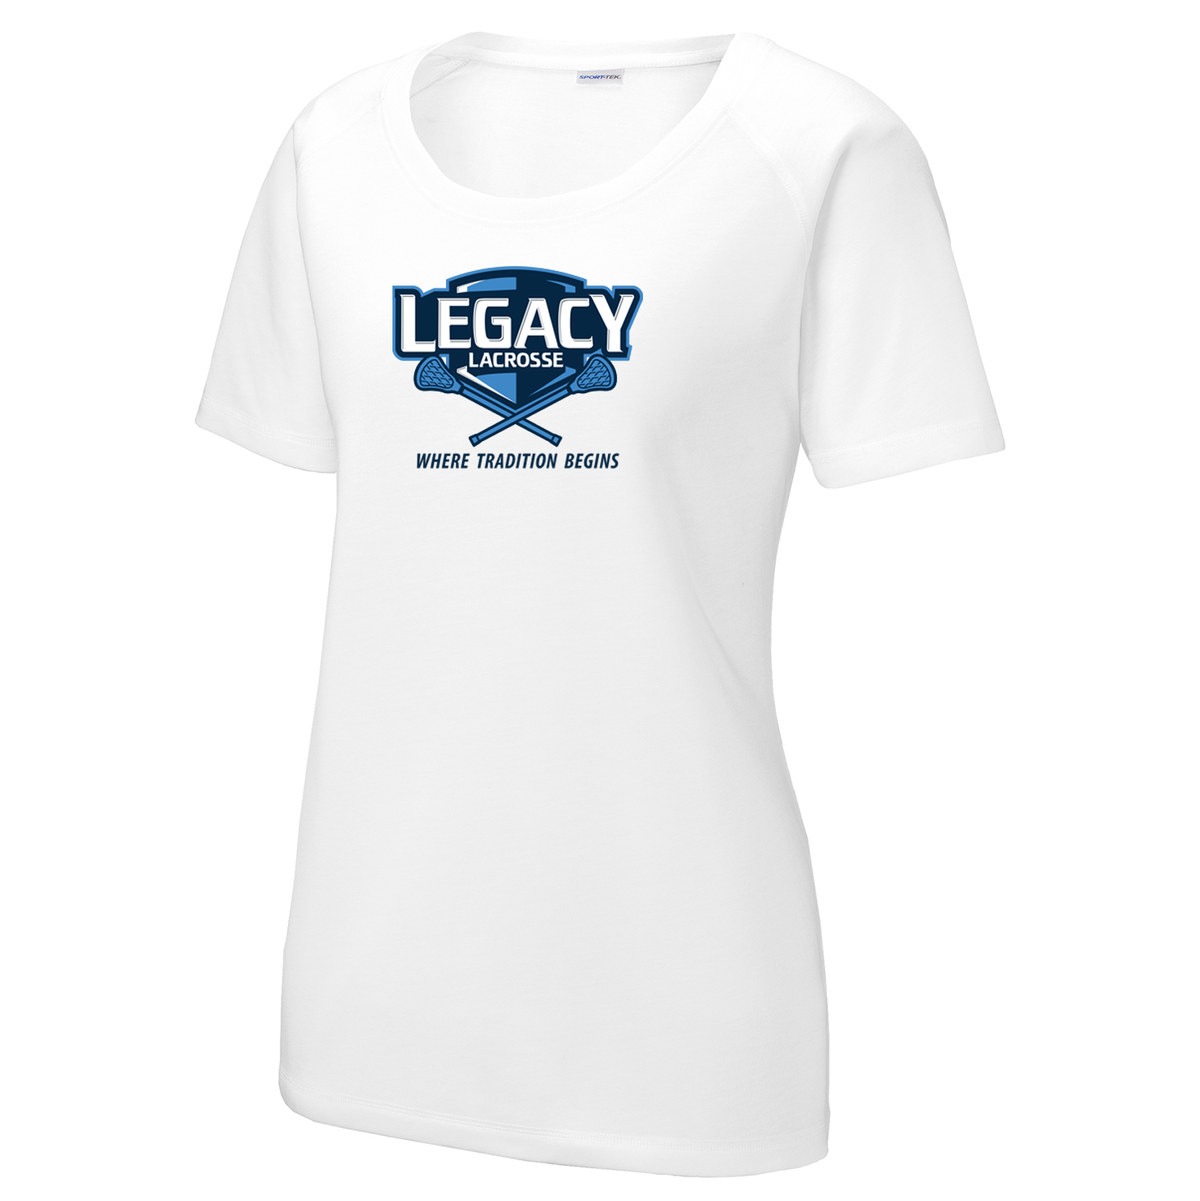 Legacy Lacrosse Womens Raglan CottonTouch